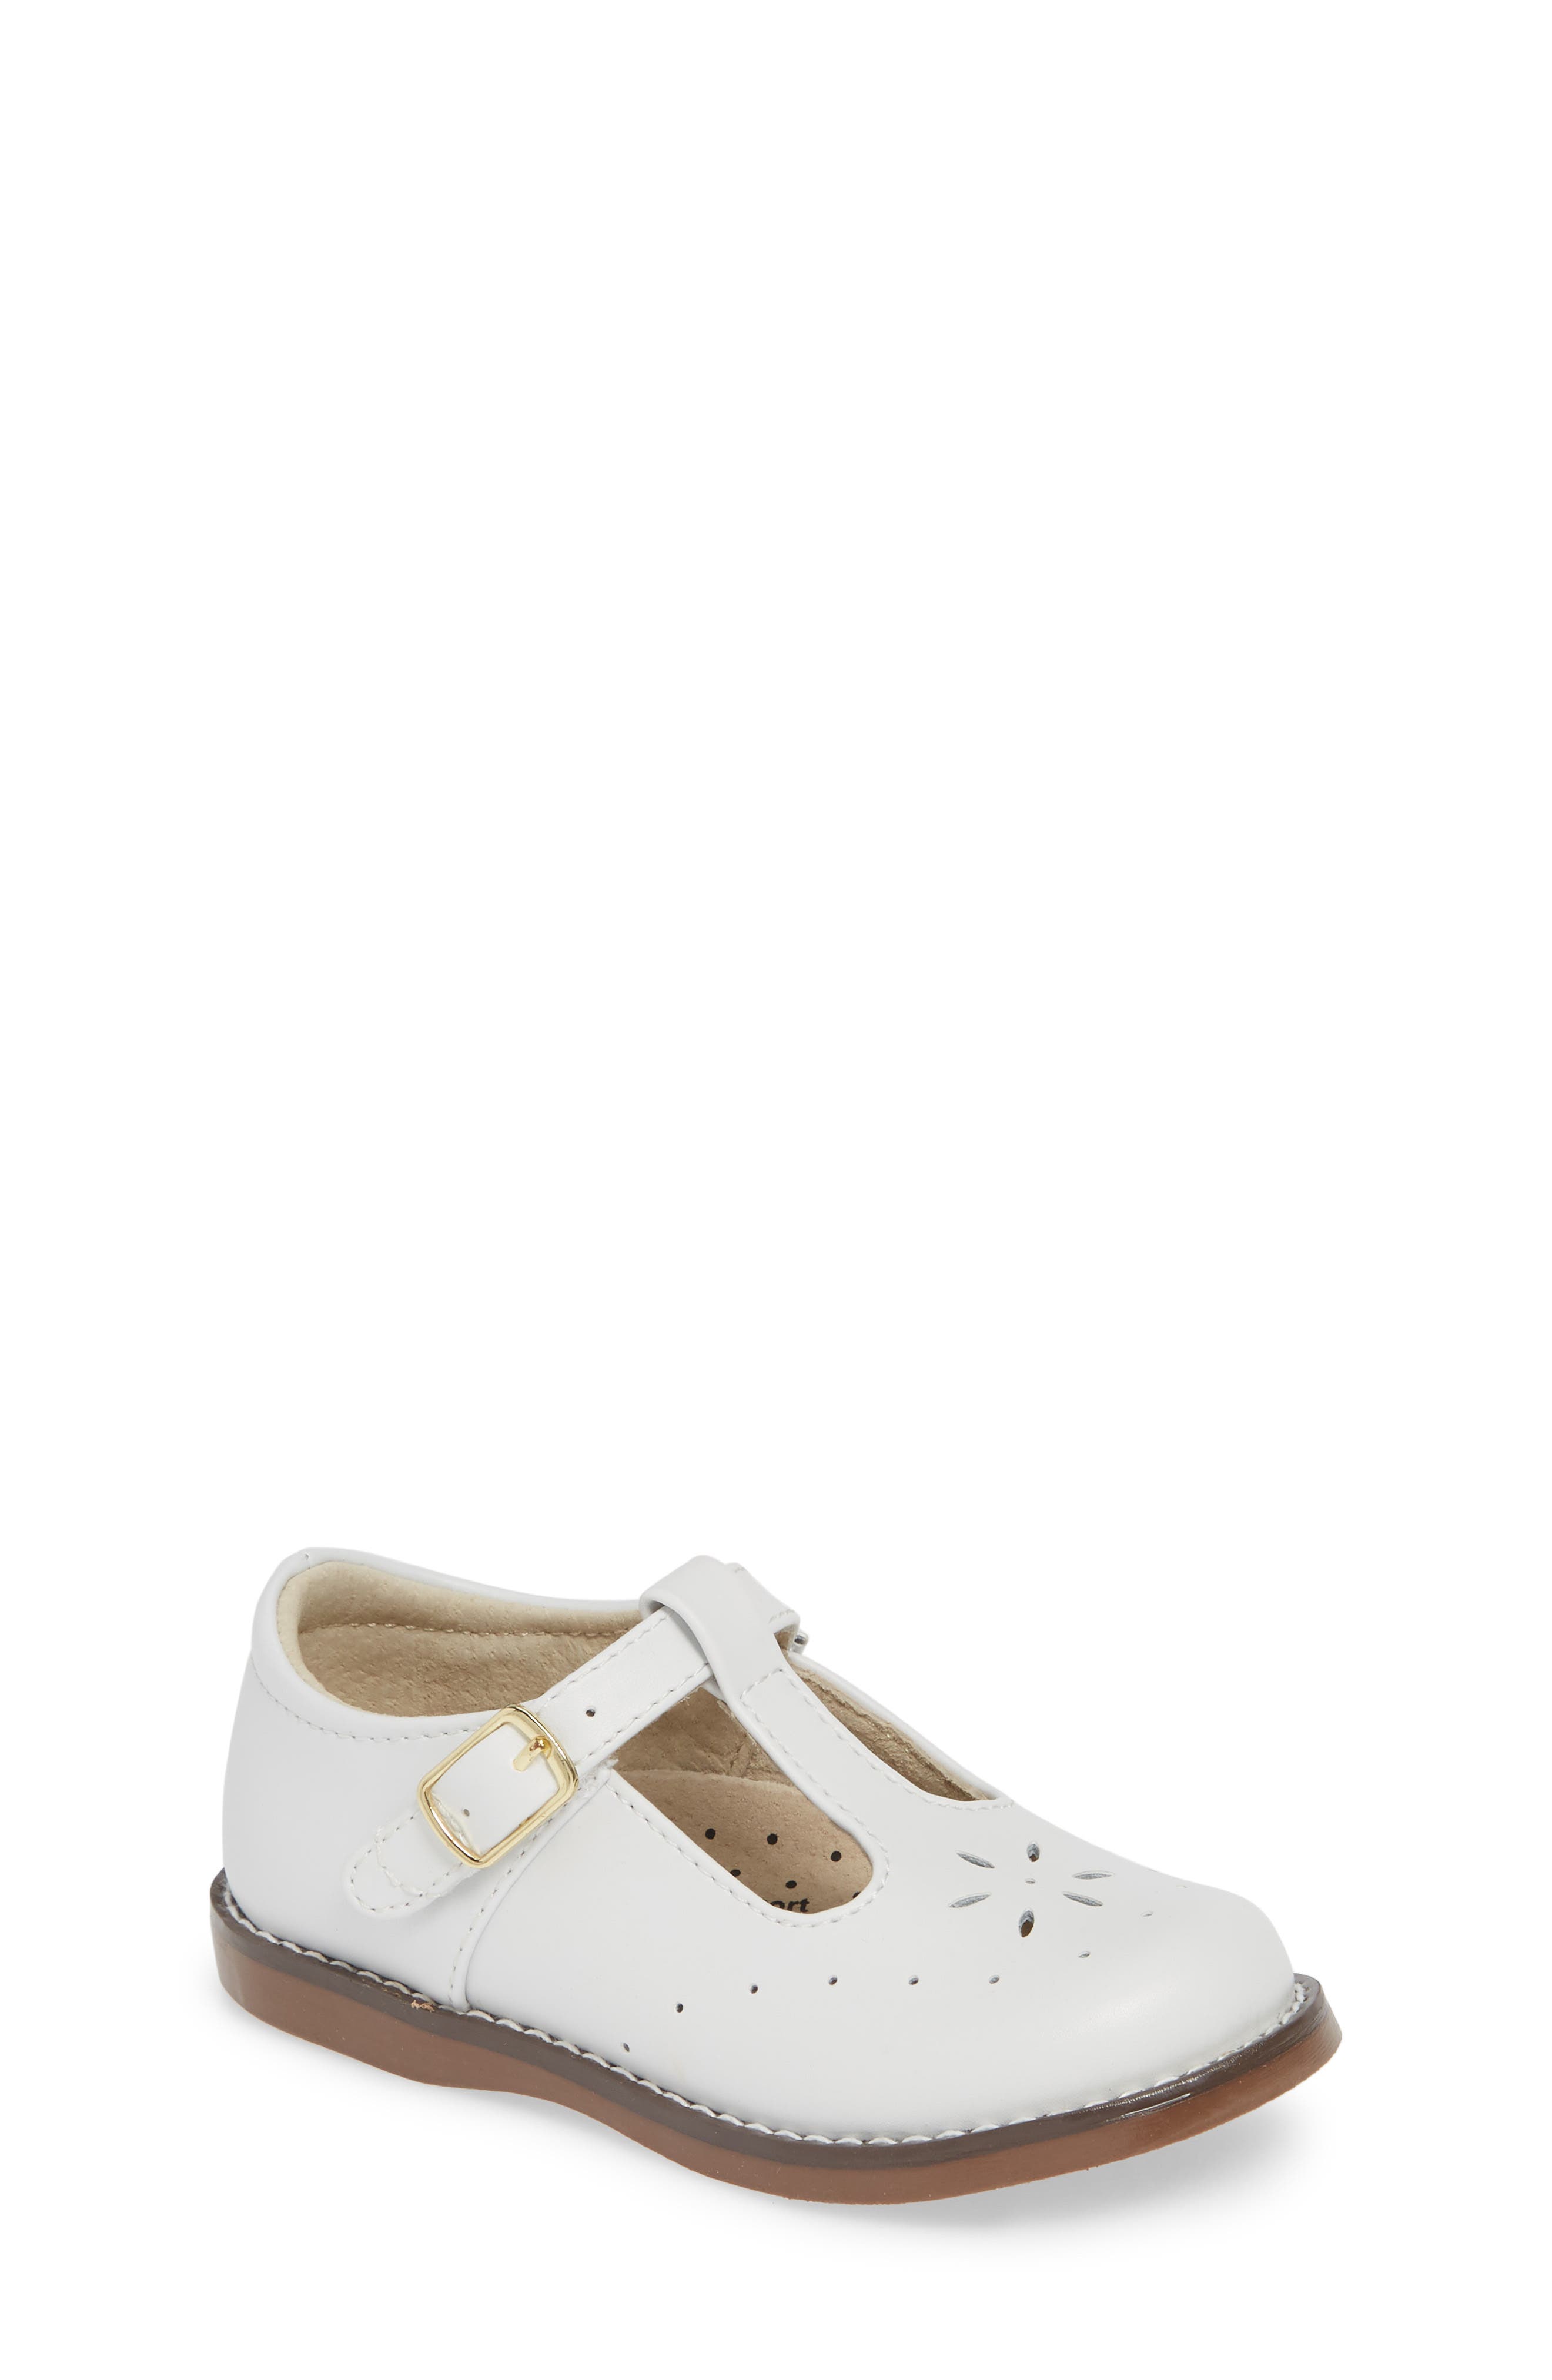 Easter Shoes for Kids' White | Nordstrom